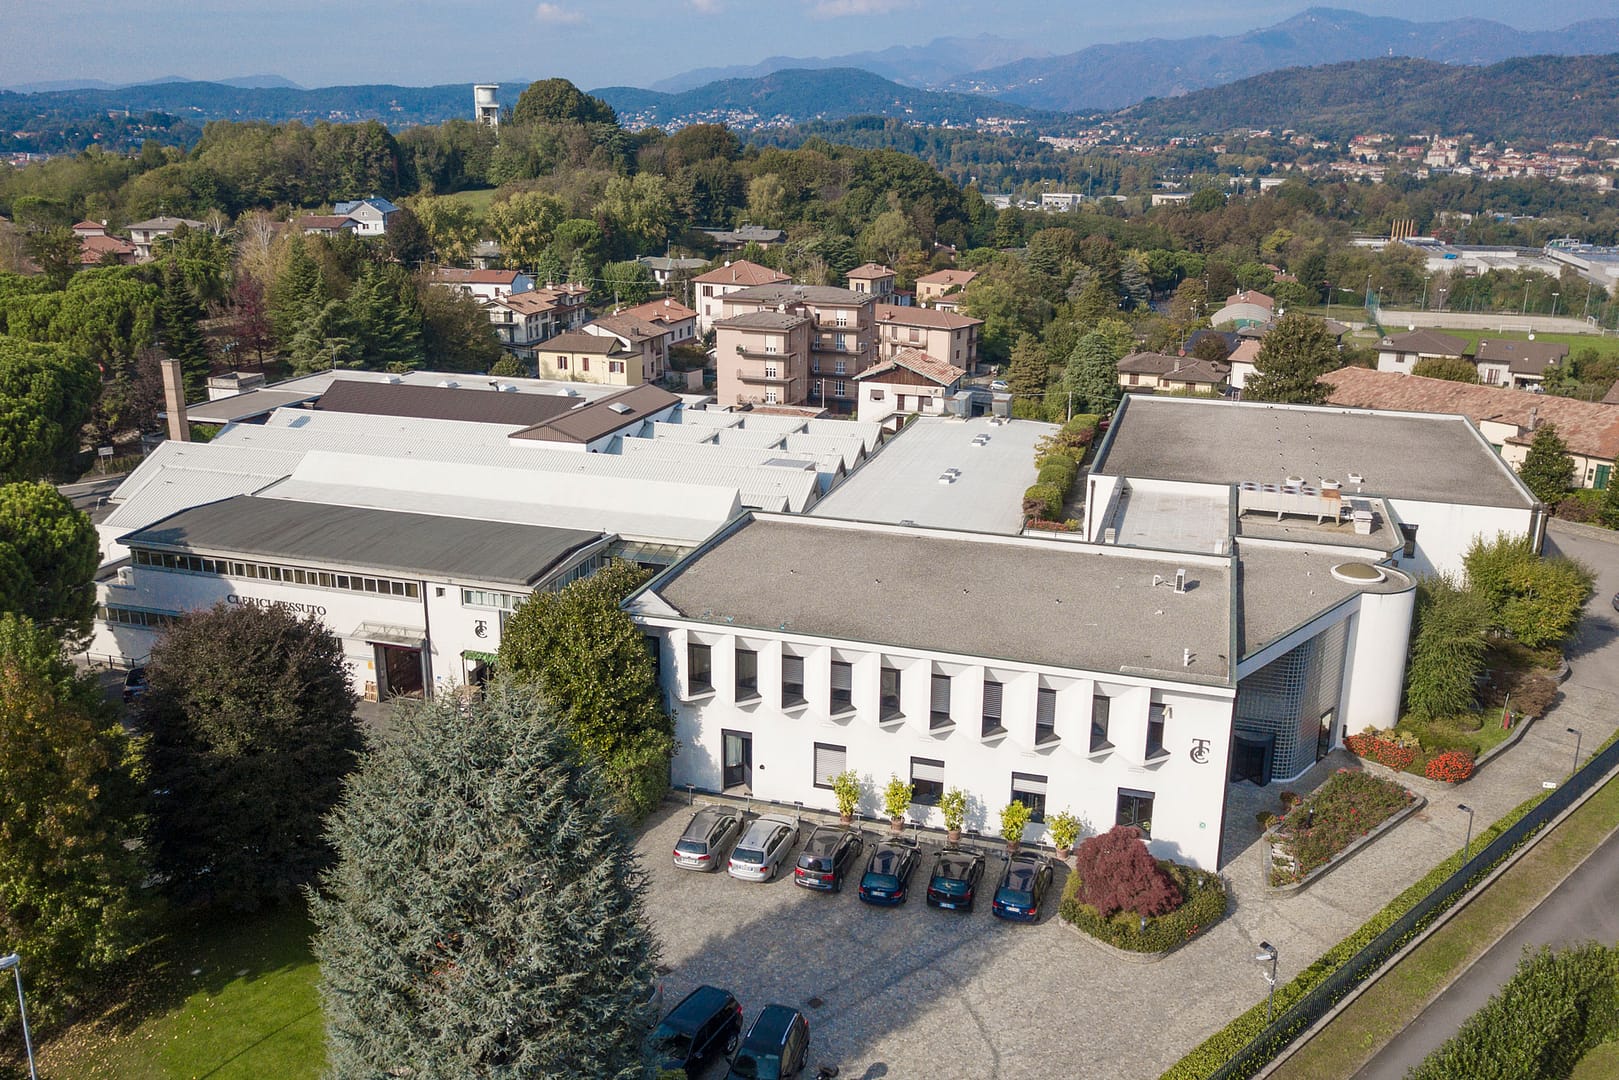 Clerici Tessuto headquarters in Grandate (Como)